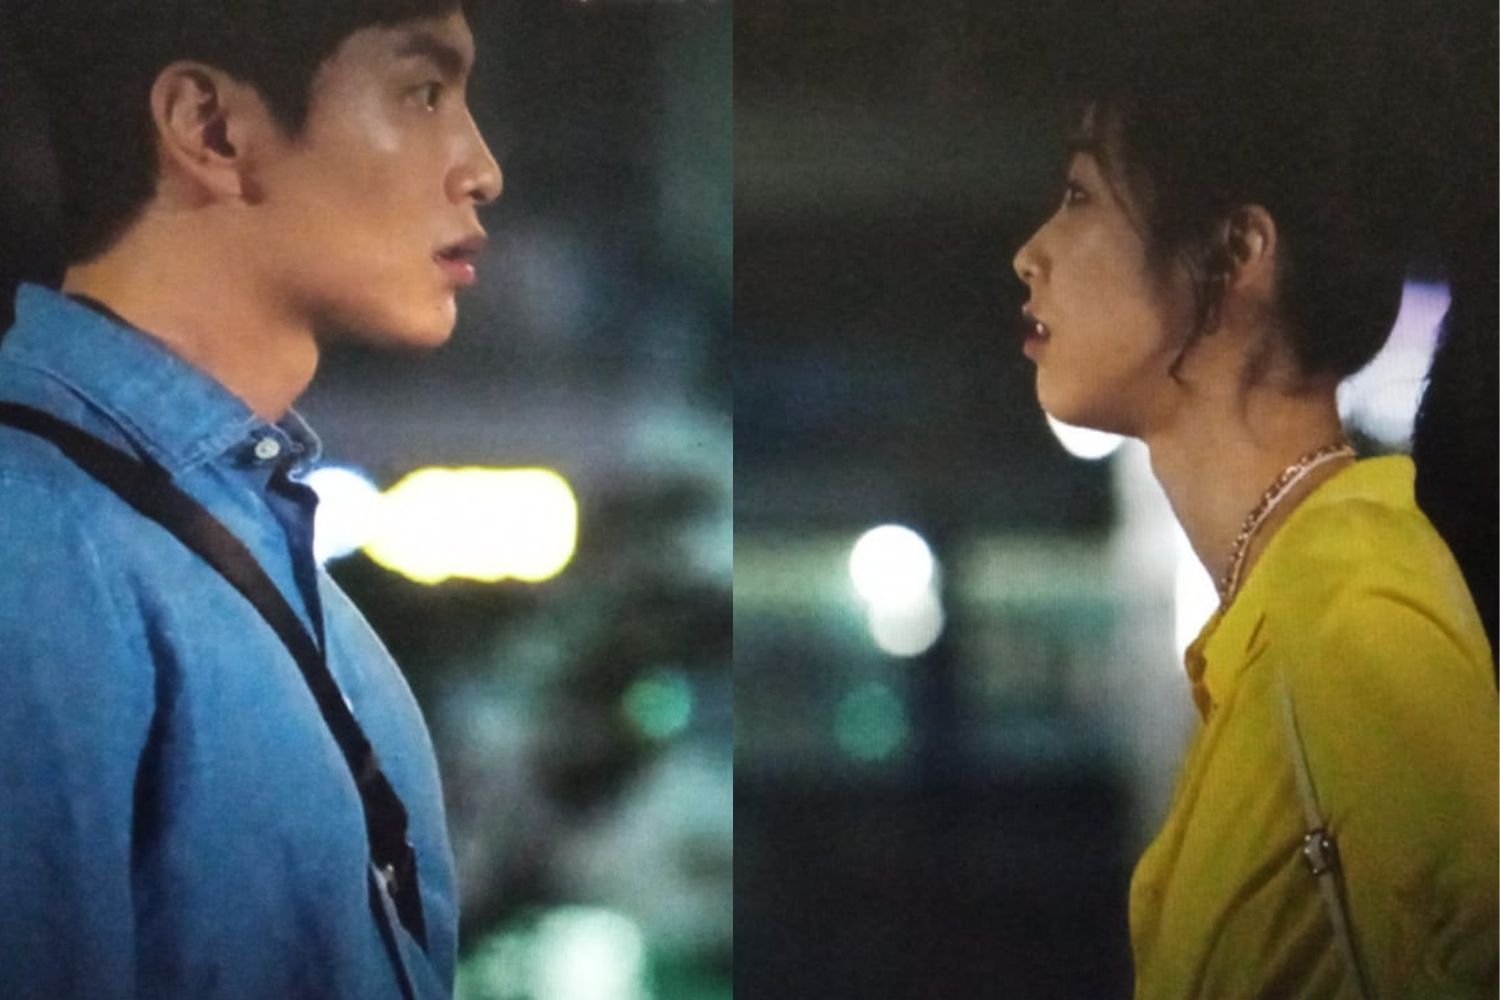 Yeom Chang Hee and his girlfriend's break-up scene.